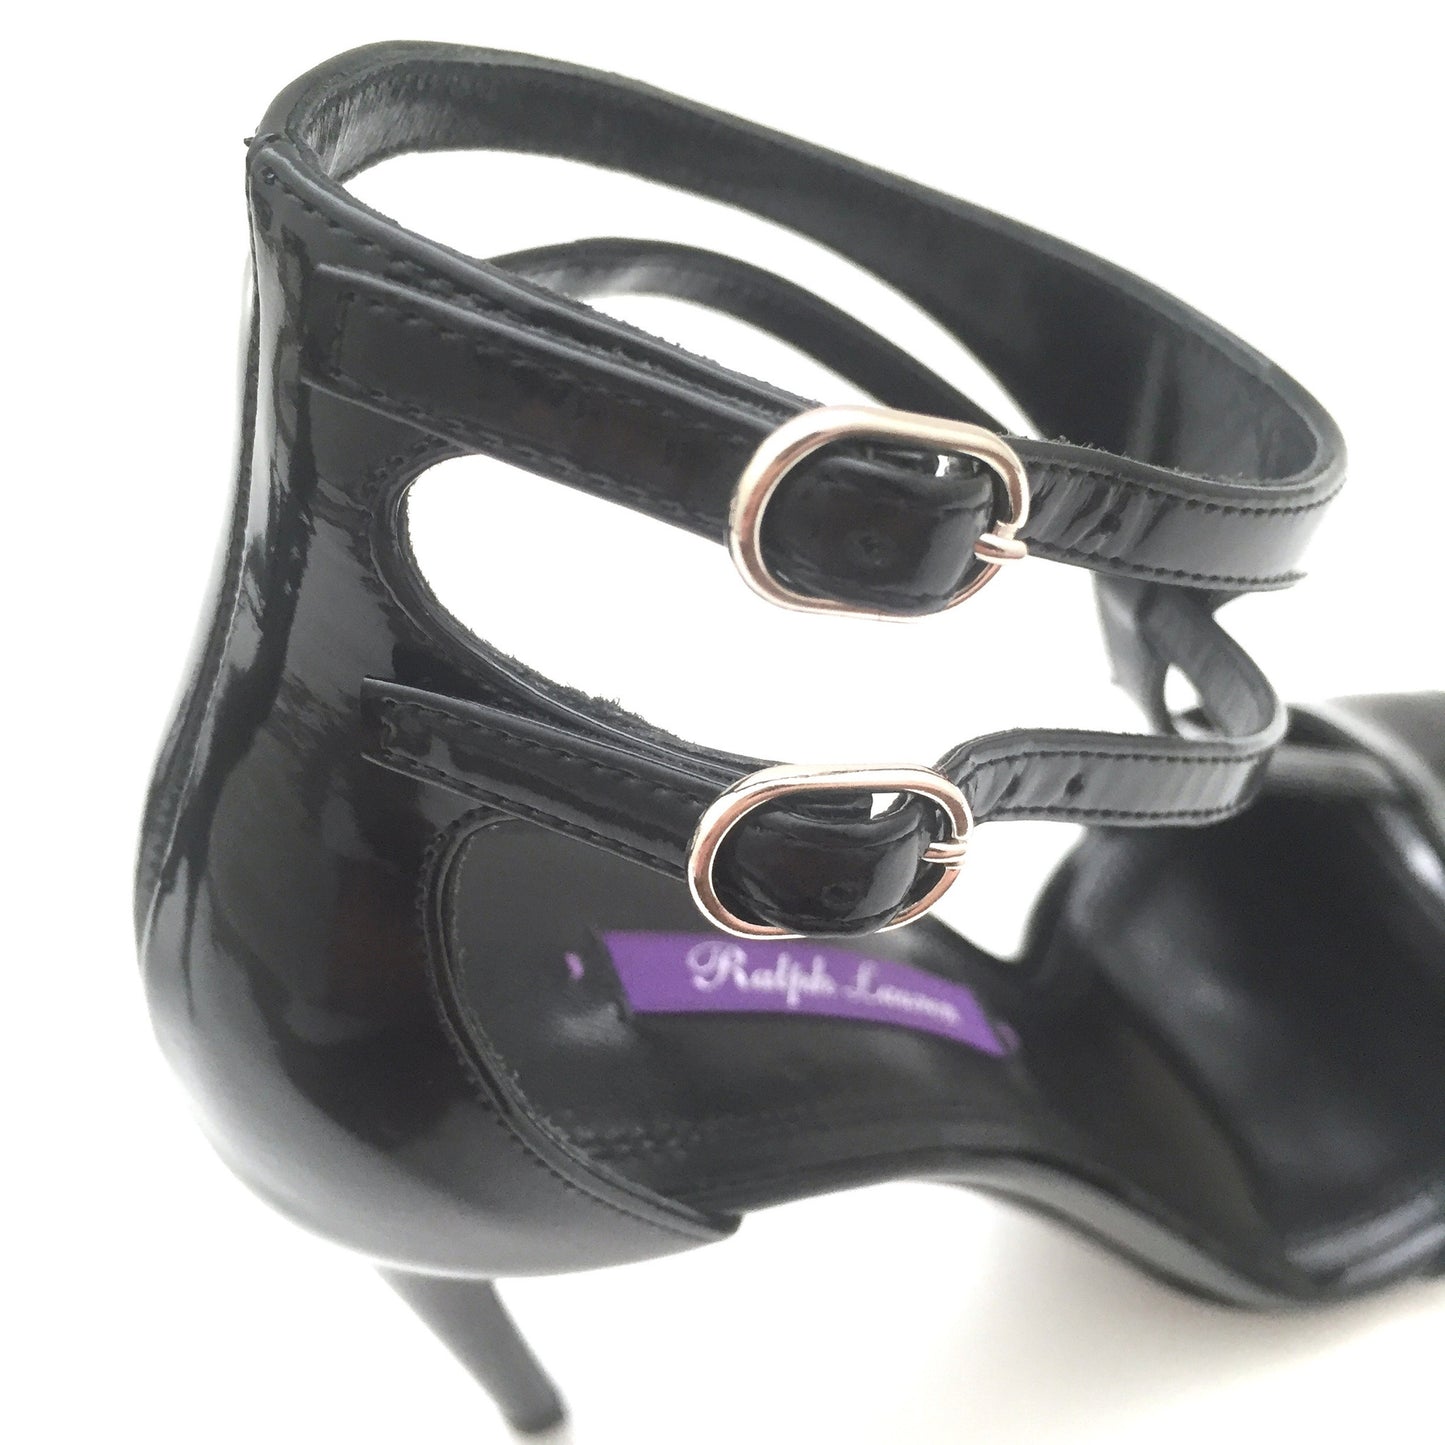 Ralph Lauren - Black Patent Leather 'Blinira' Heels